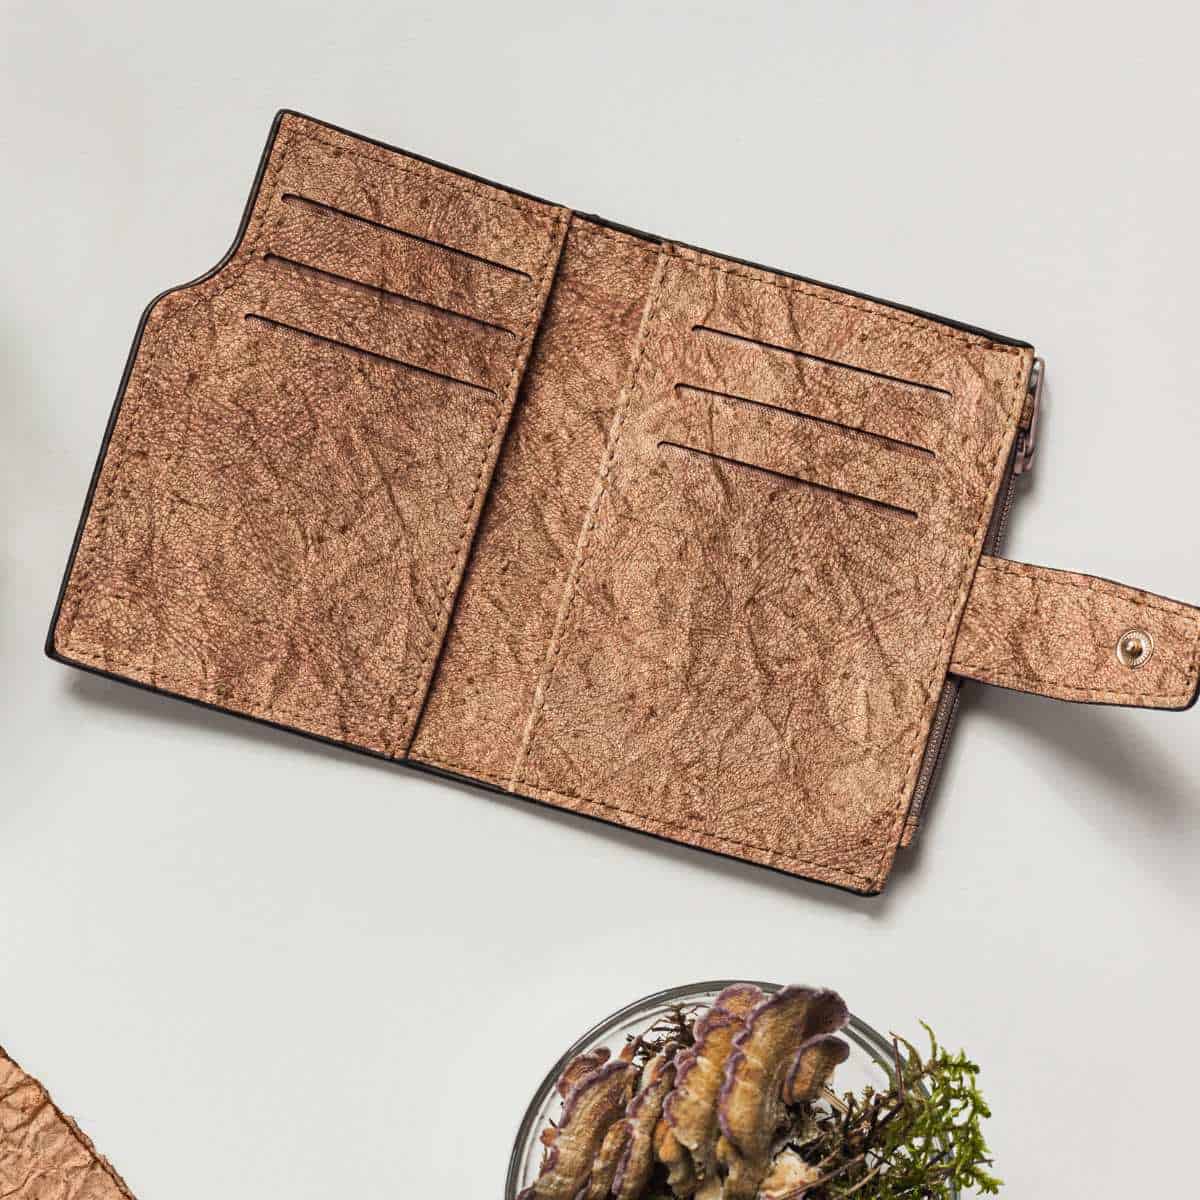 Vegan leather wallet made from mushroom mycelium.